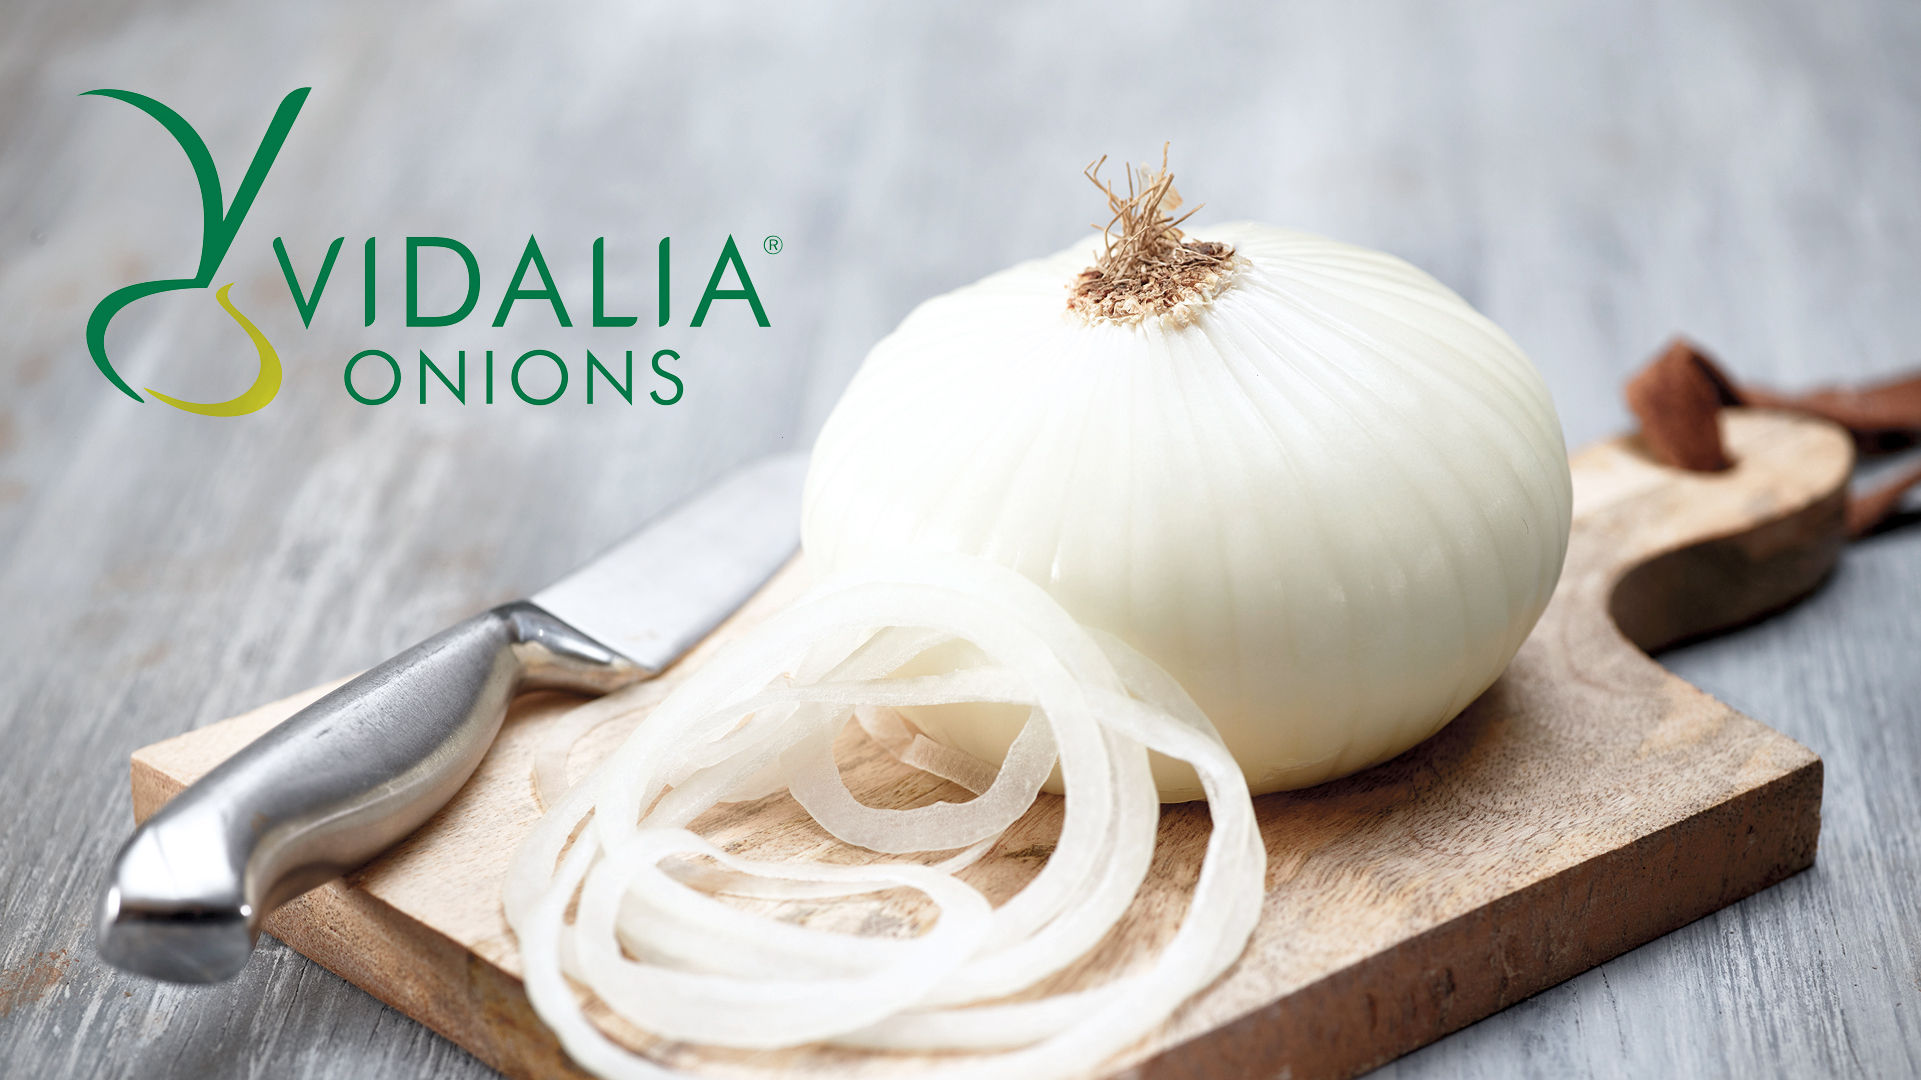  RCGOP offers Vidalia Onions in fundraiser online